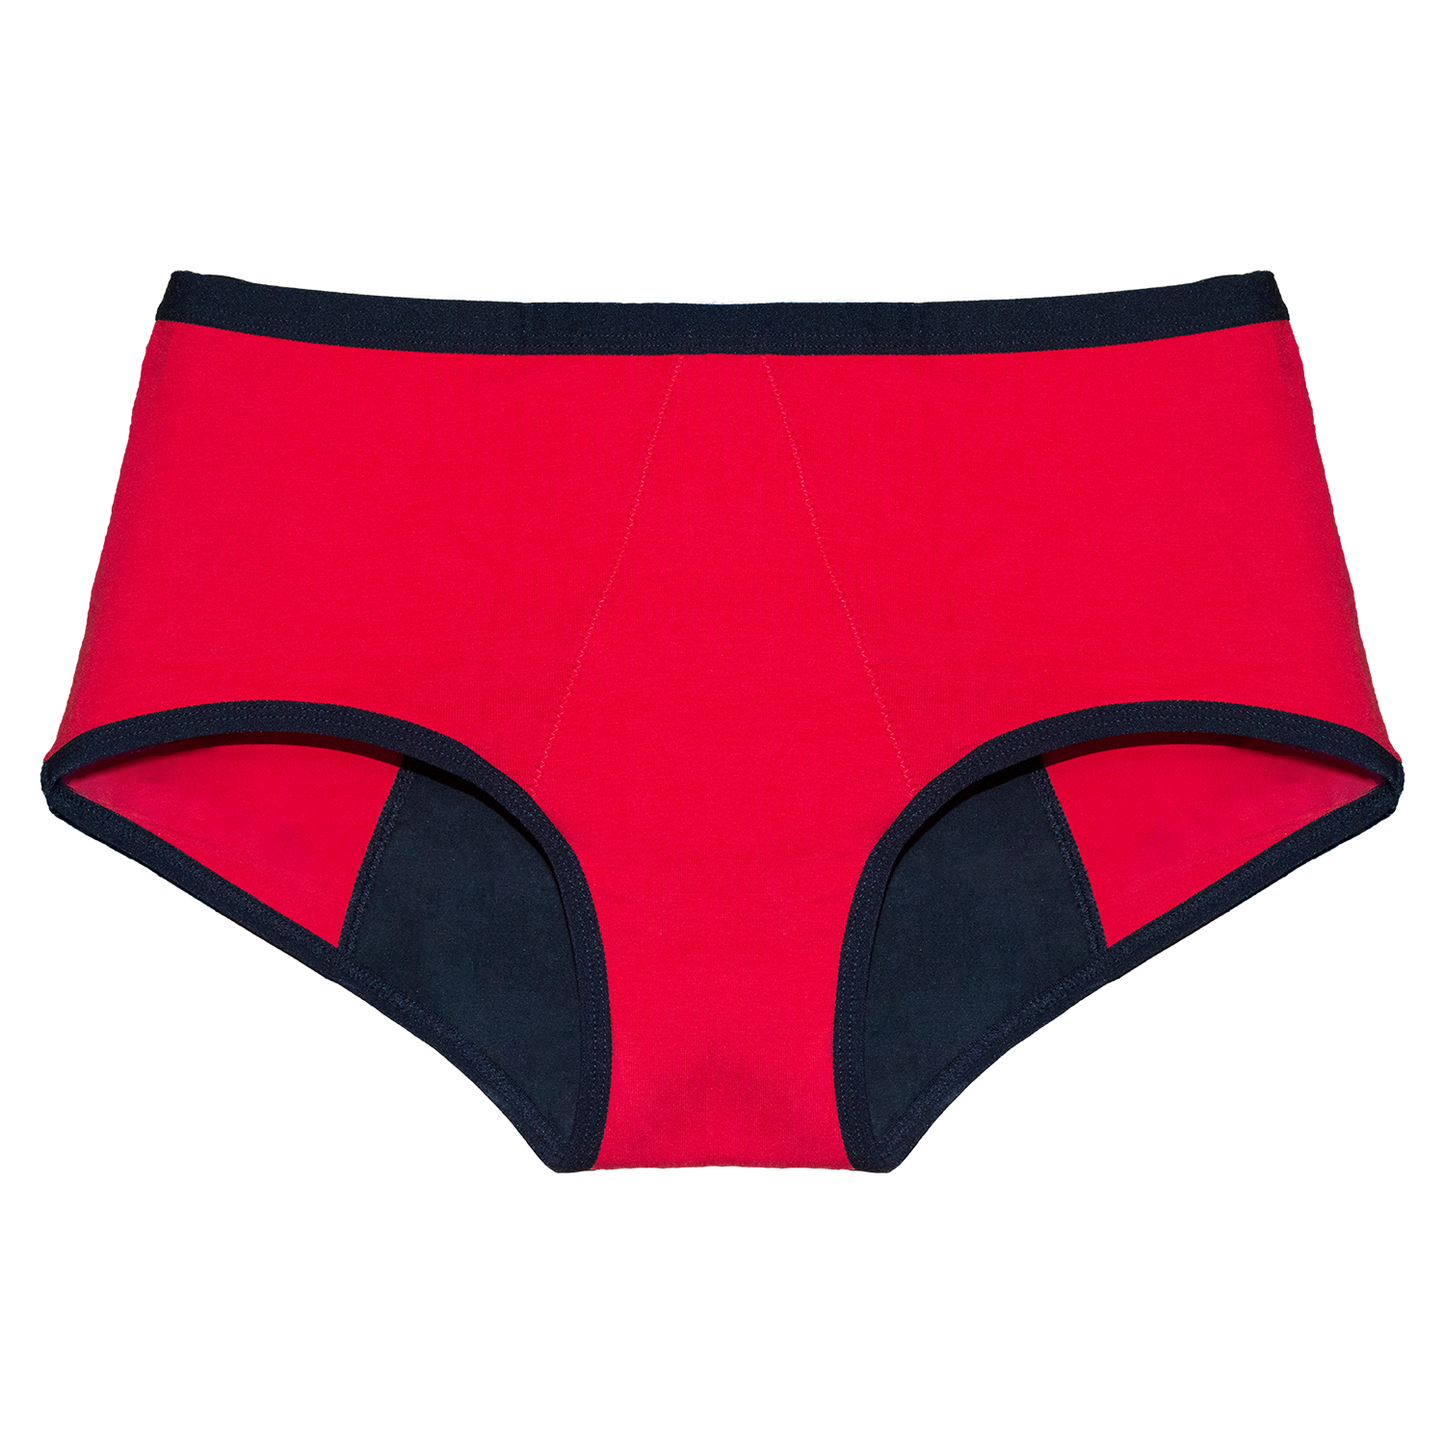 Go Pad Free Red color period underwear